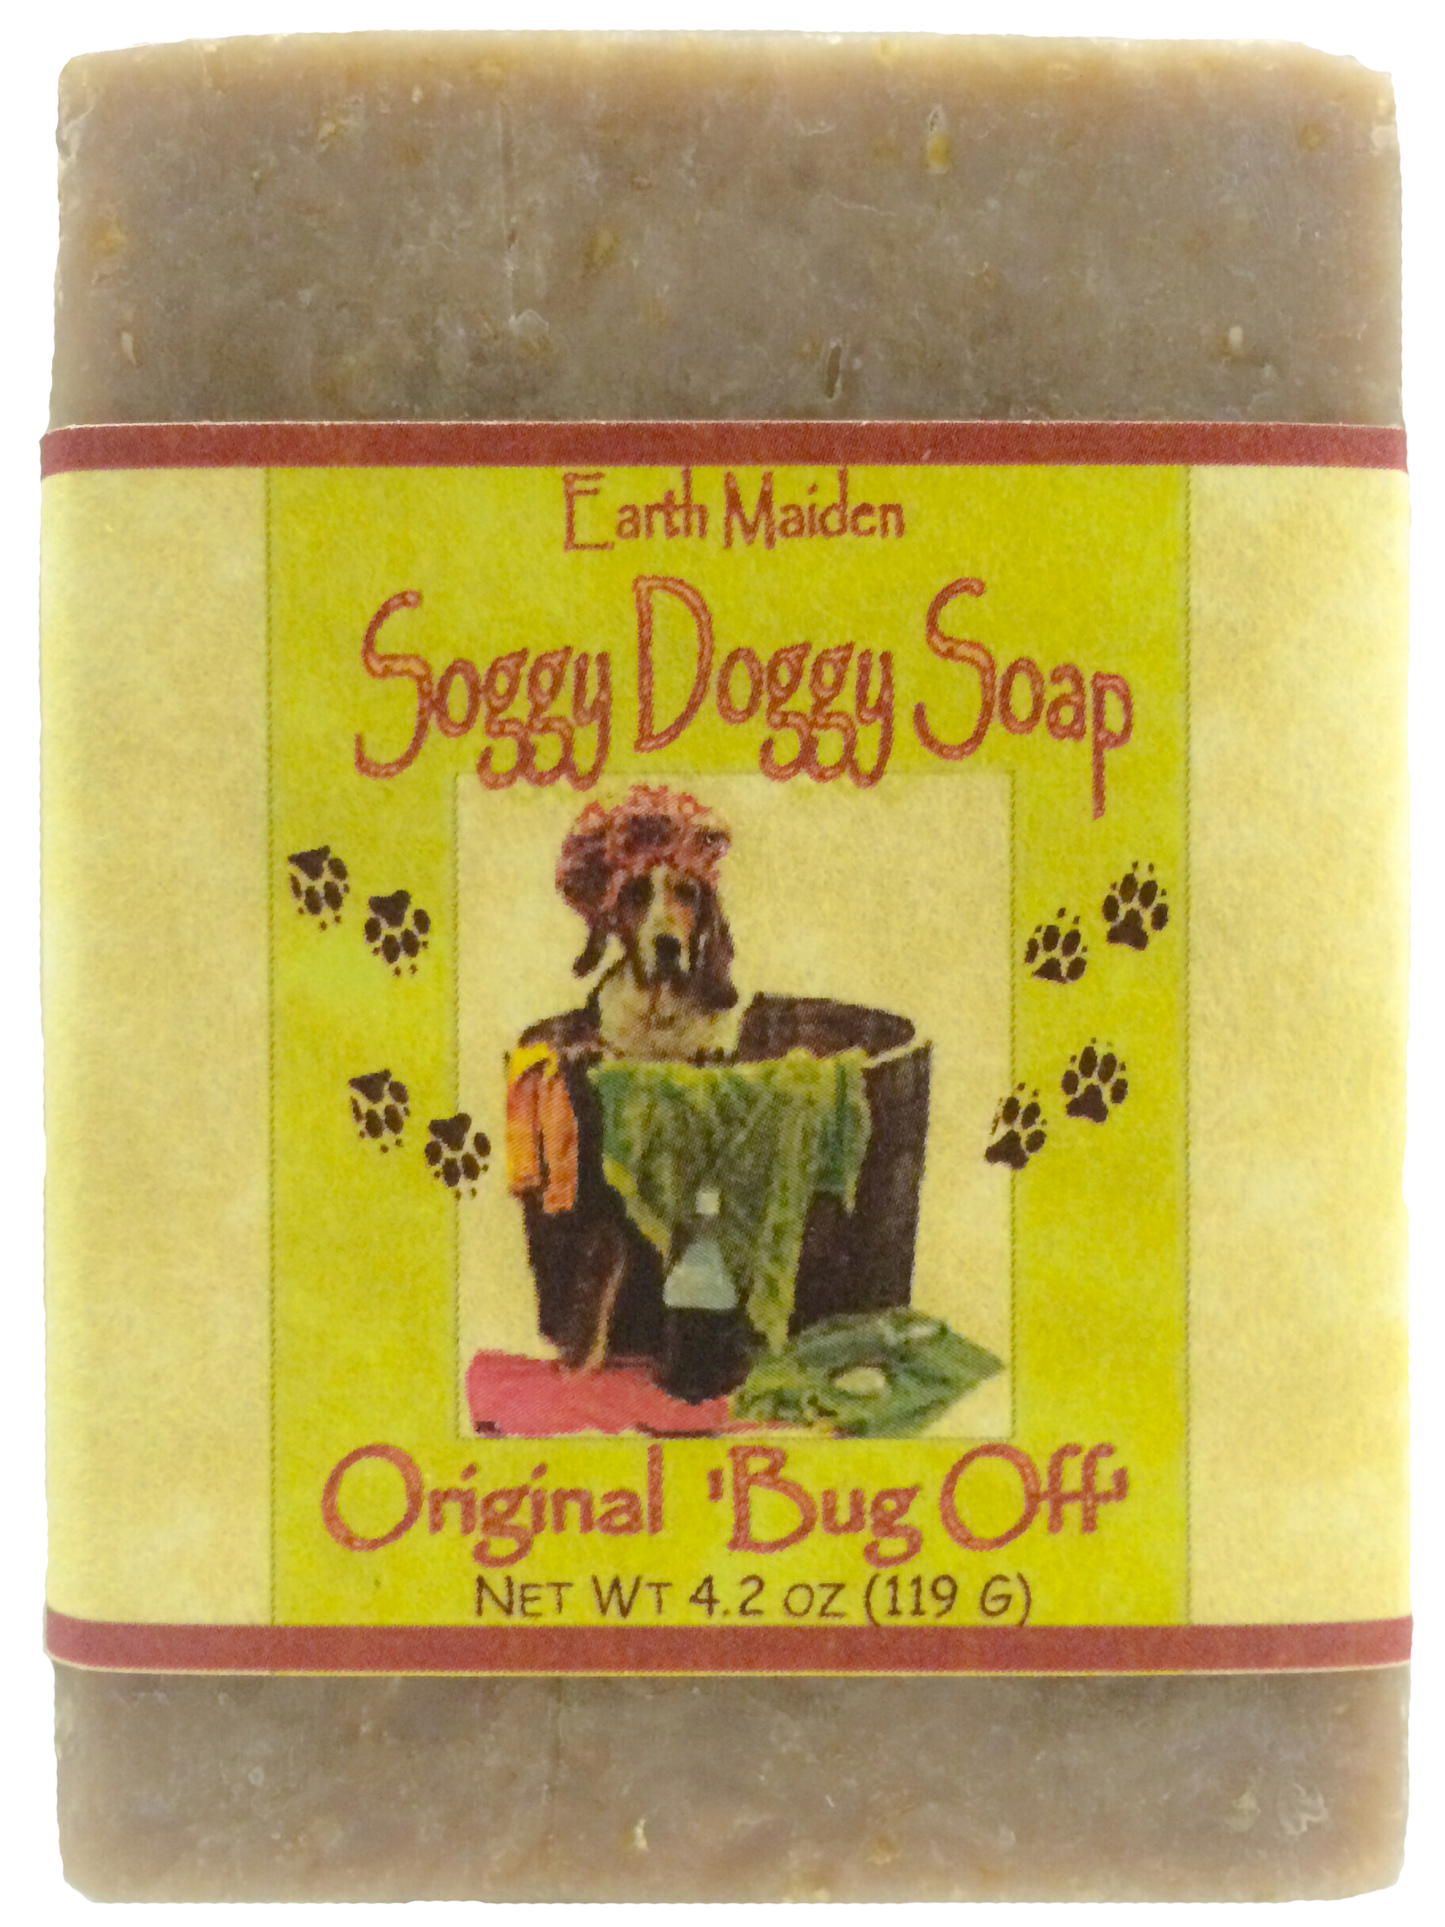 Dog Shampoo: Original `Bug off’ Soggy Doggy Soap